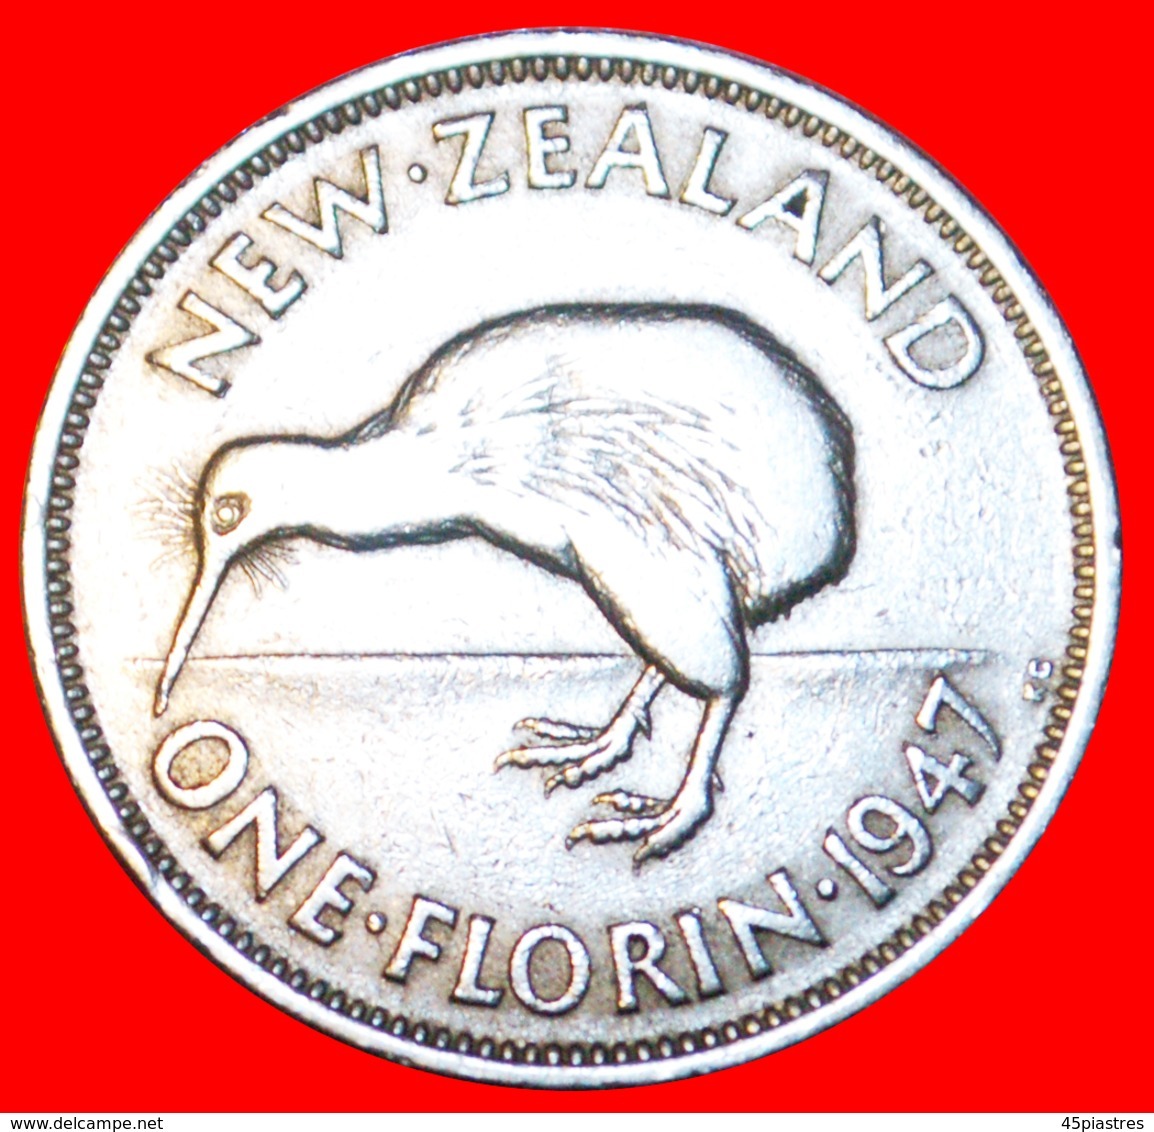  * KIWI BIRD: NEW ZEALAND ★ FLORIN 1947! GEORGE VI (1937-1952) LOW START ★ NO RESERVE!   